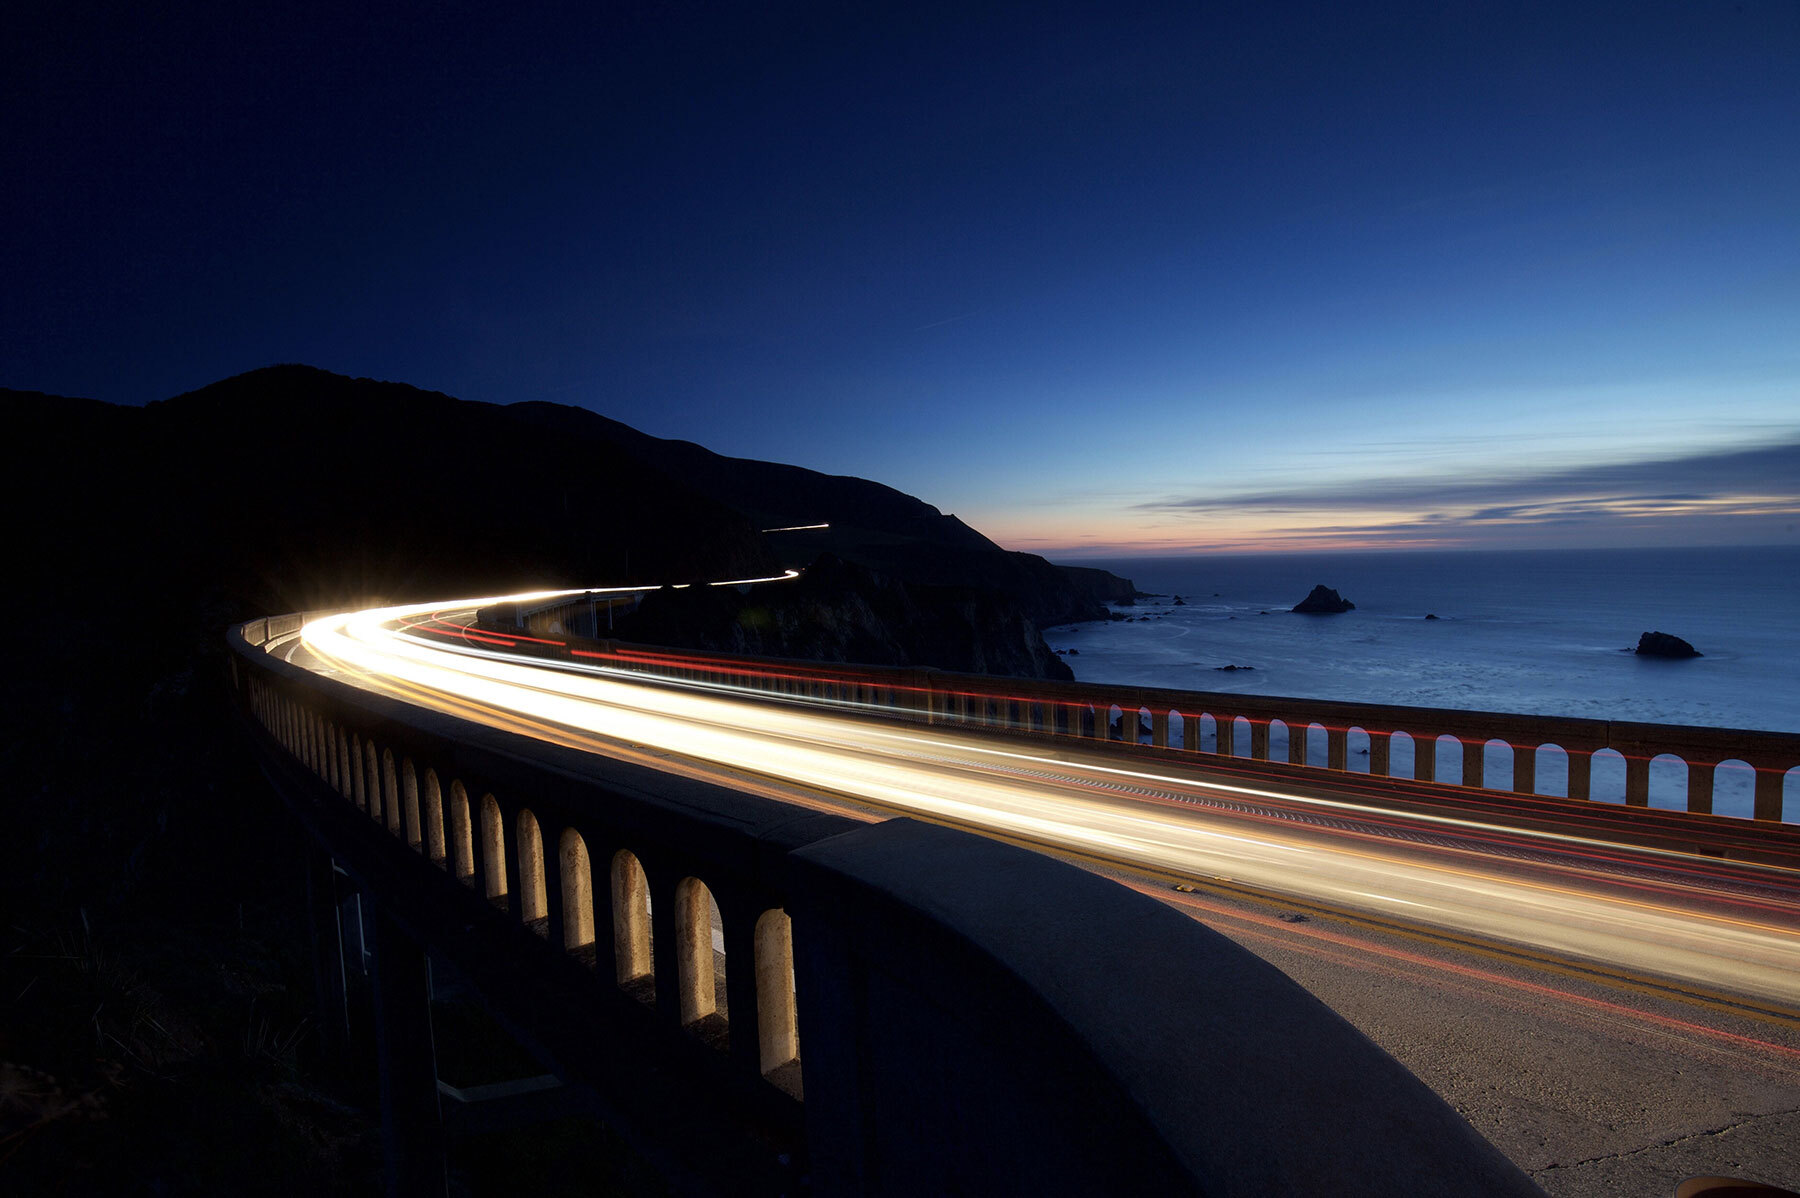 timelampse of car crossing bridge at sunset